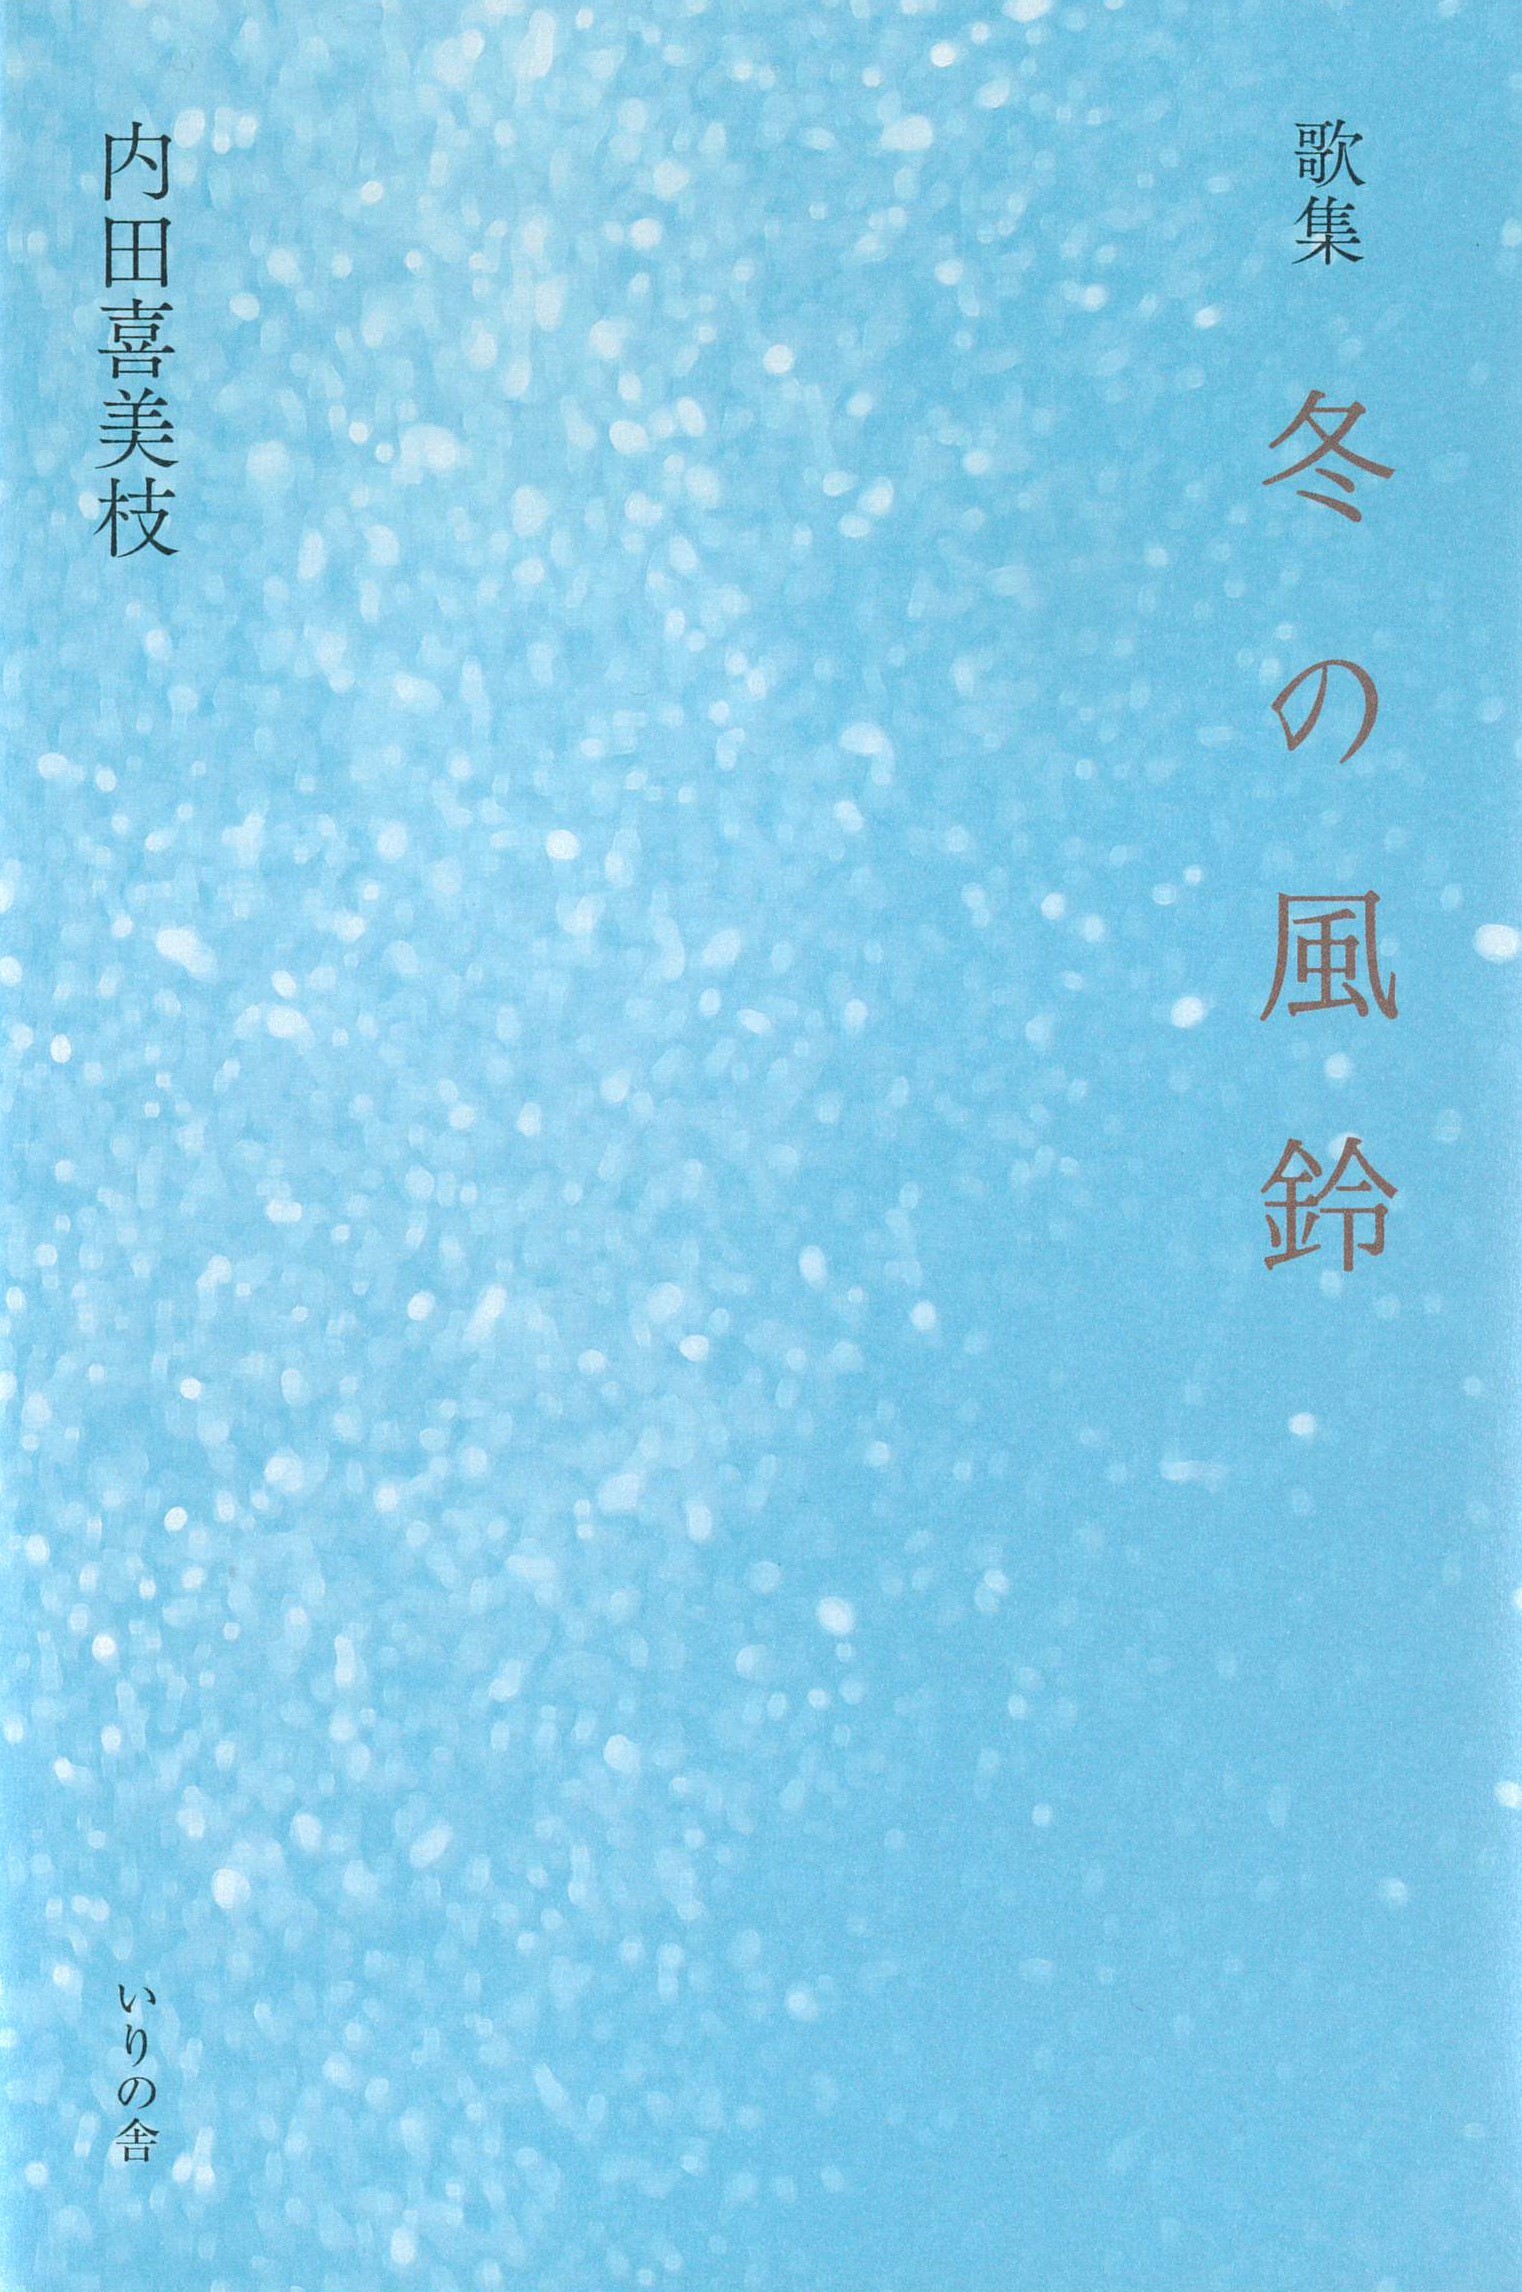 内田喜美枝歌集『冬の風鈴』